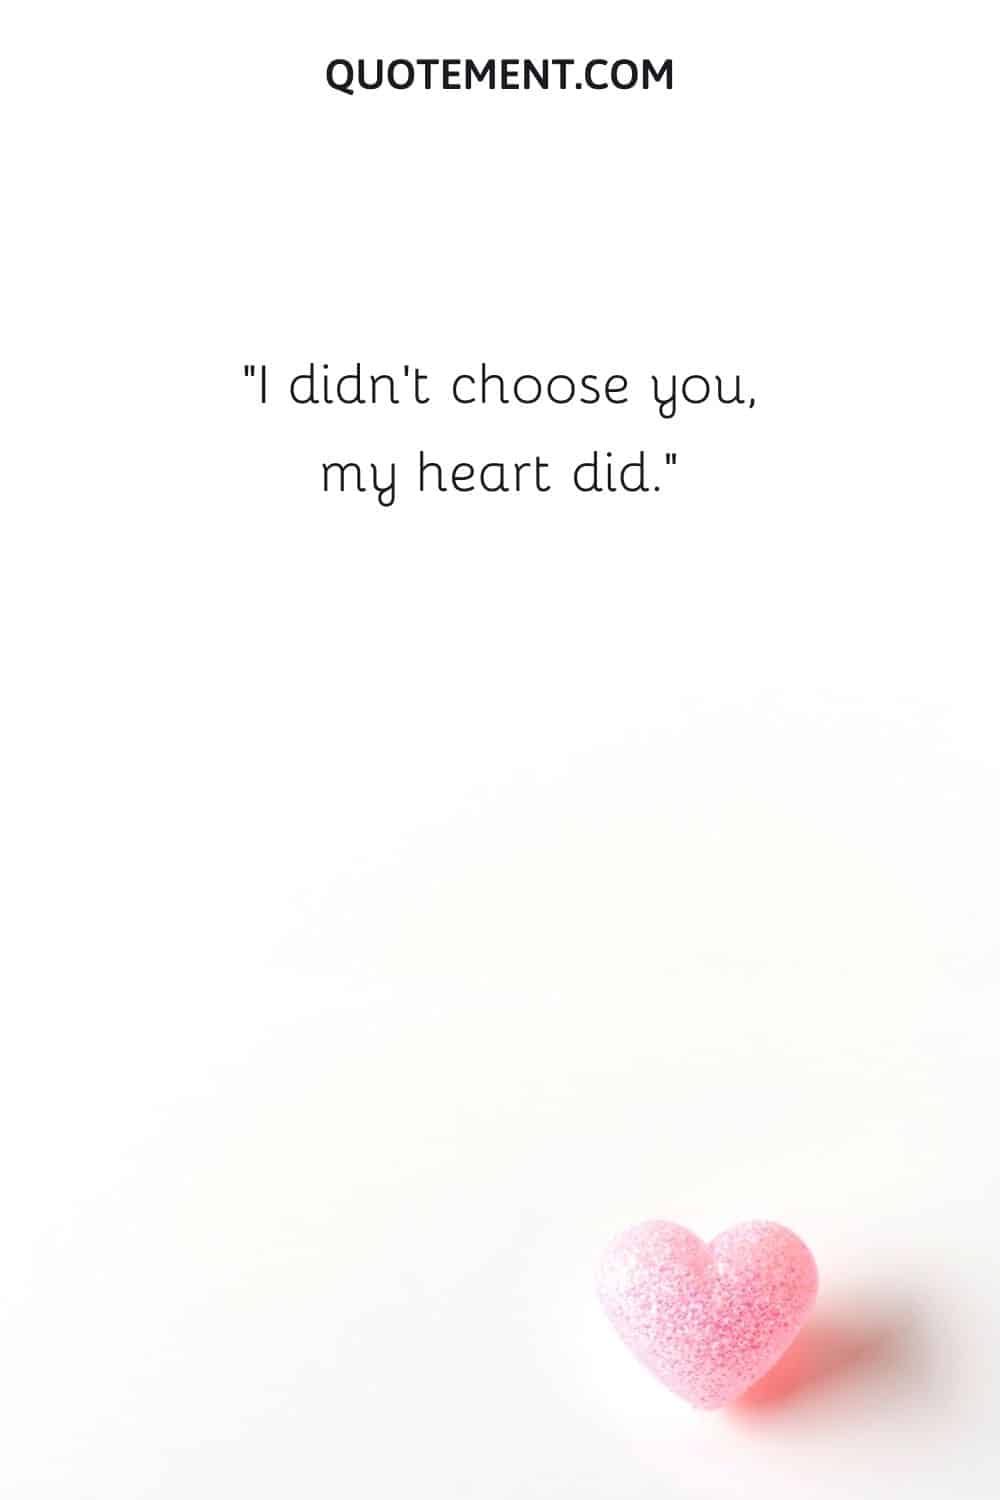 I didn't choose you, my heart did.